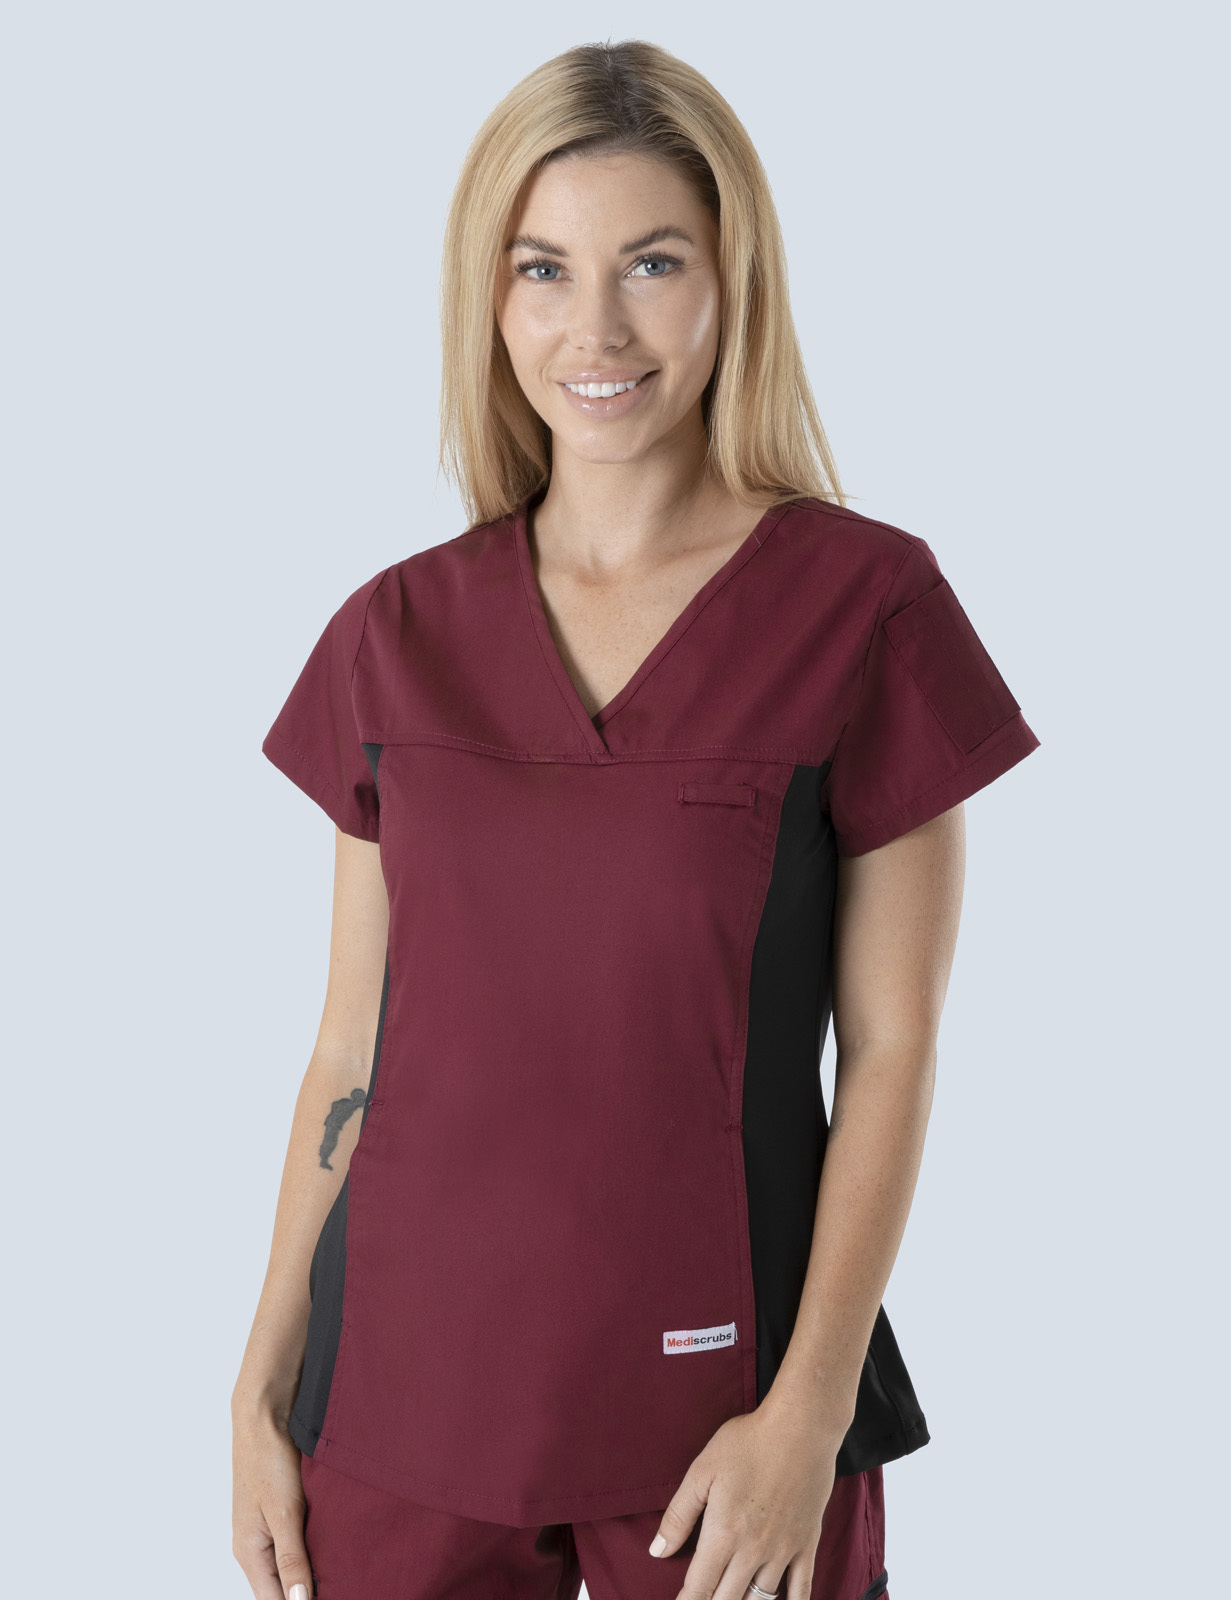 Northern Hospital - ED Nurse (Women's Fit Spandex Scrub Top in Burgundy incl Logos)